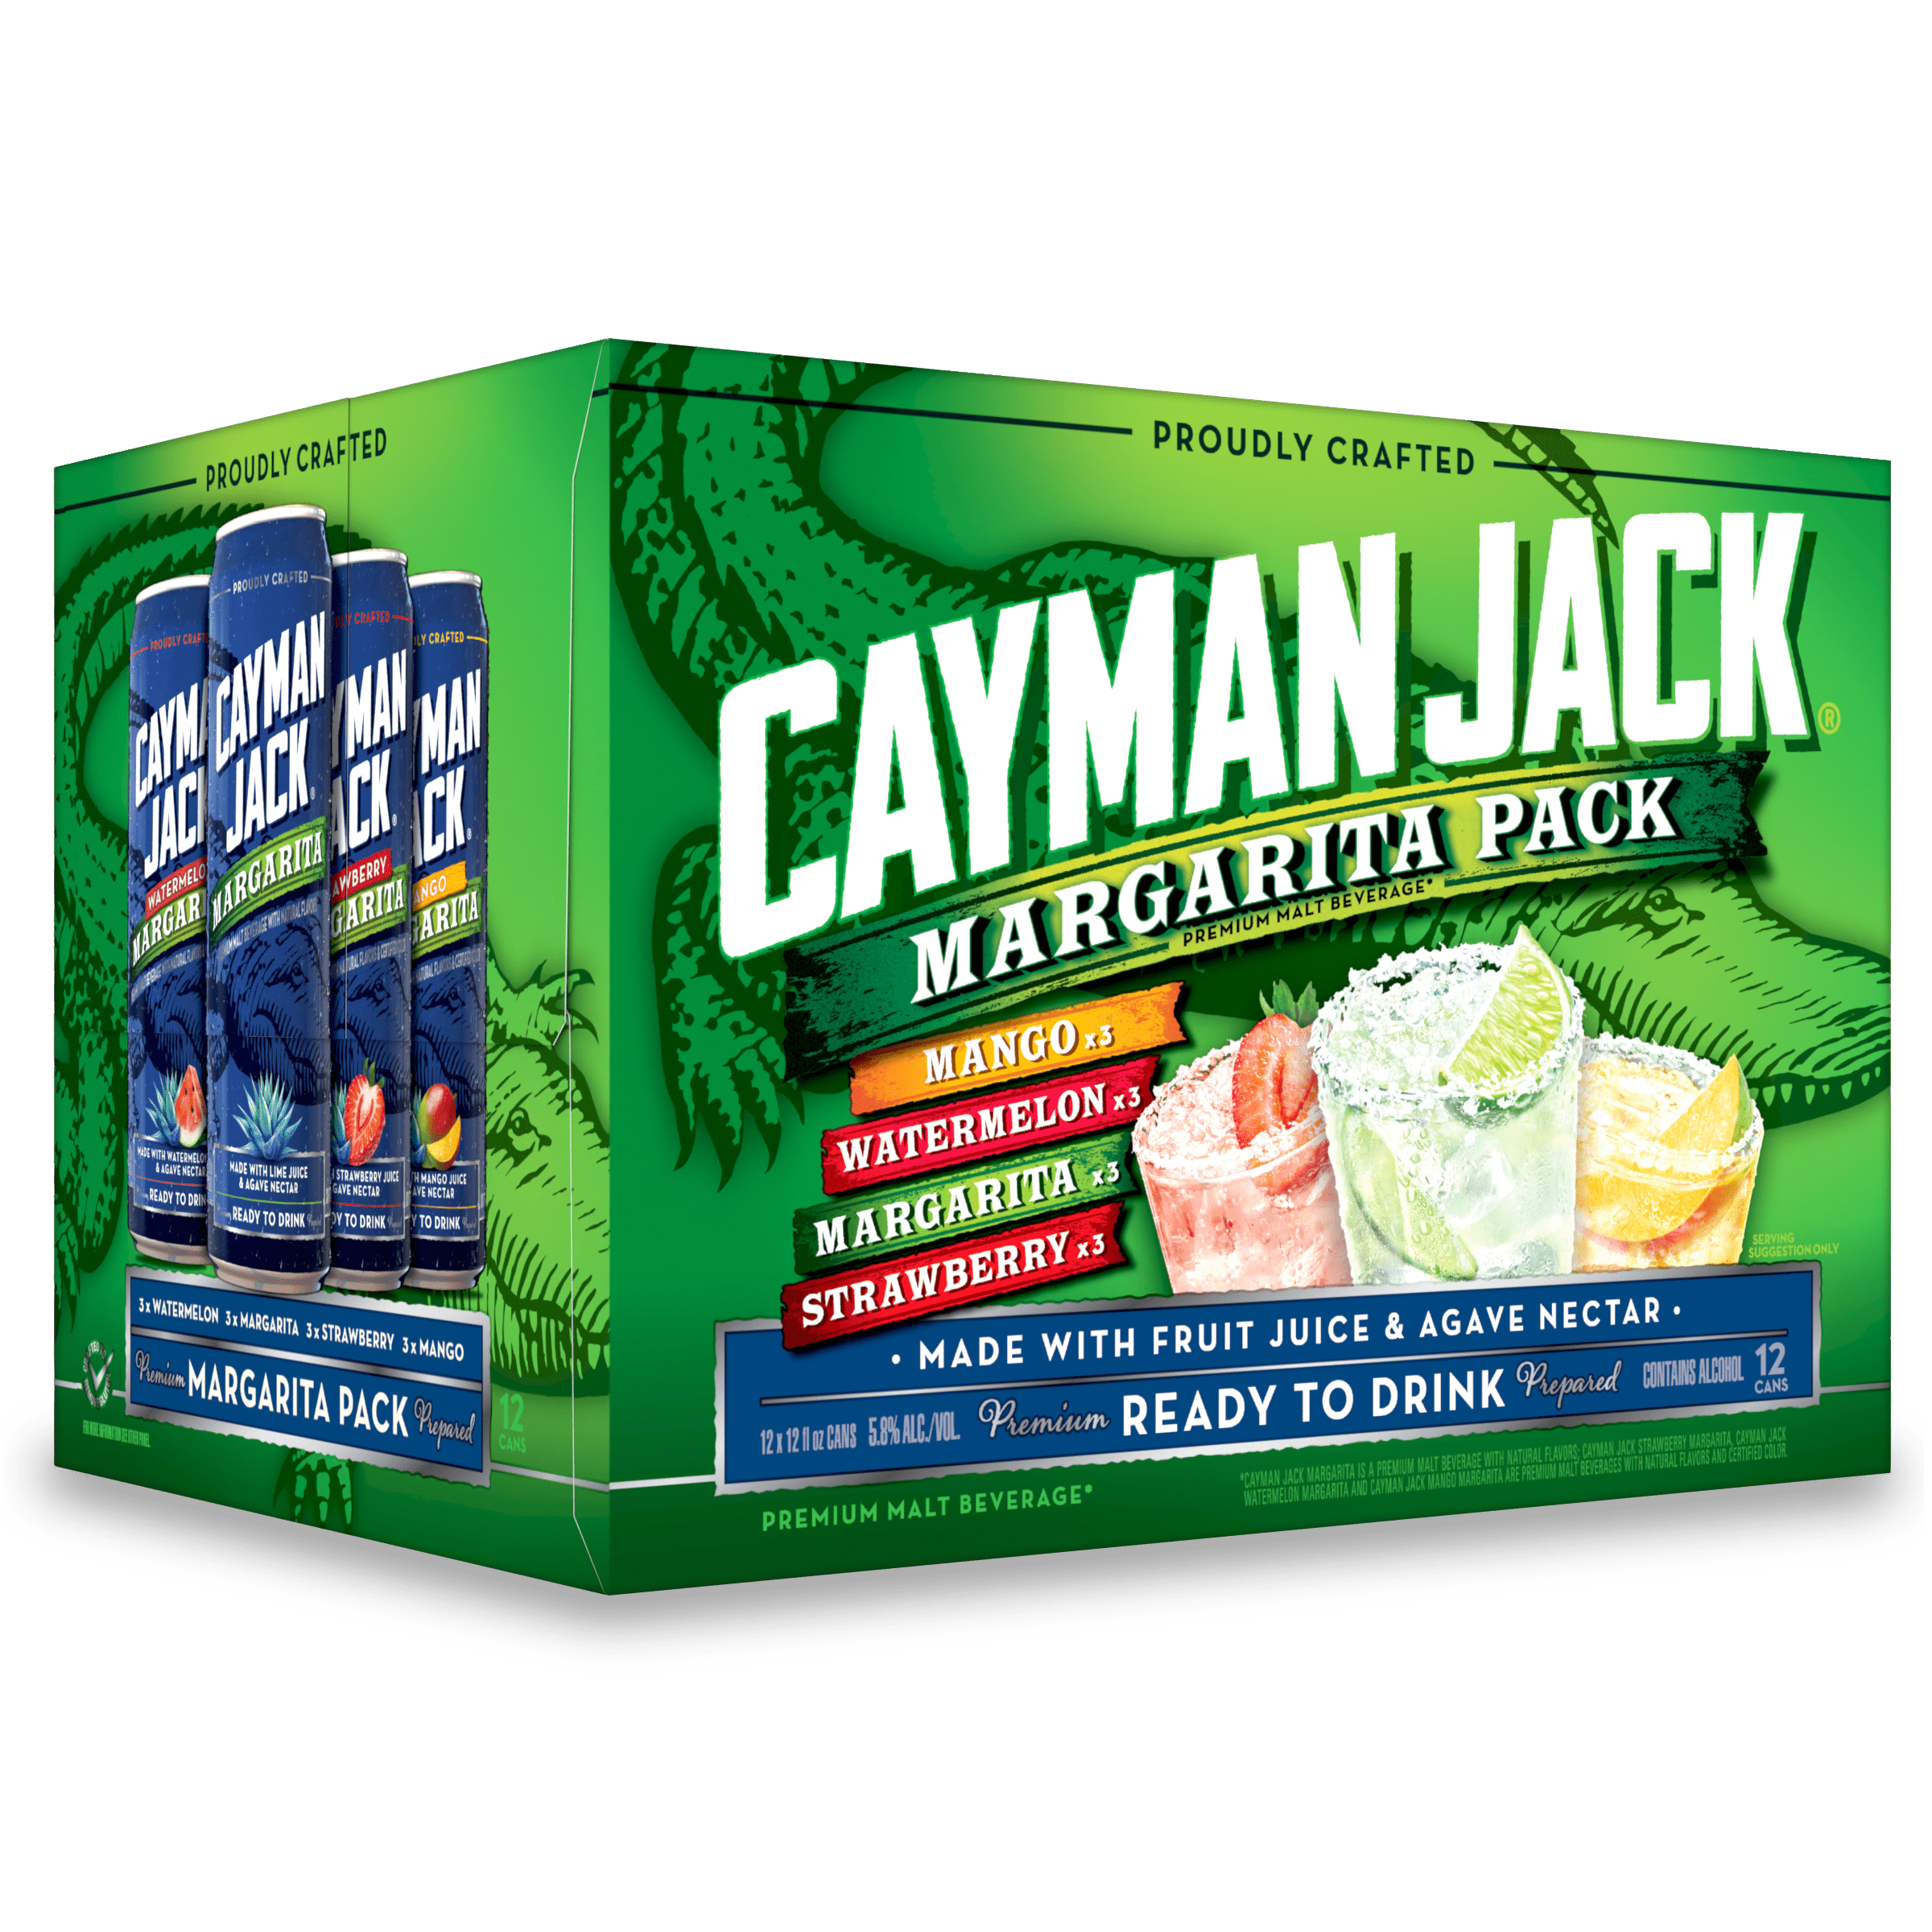 cayman-jack-margarita-nutrition-label-saunders-faruolo-99